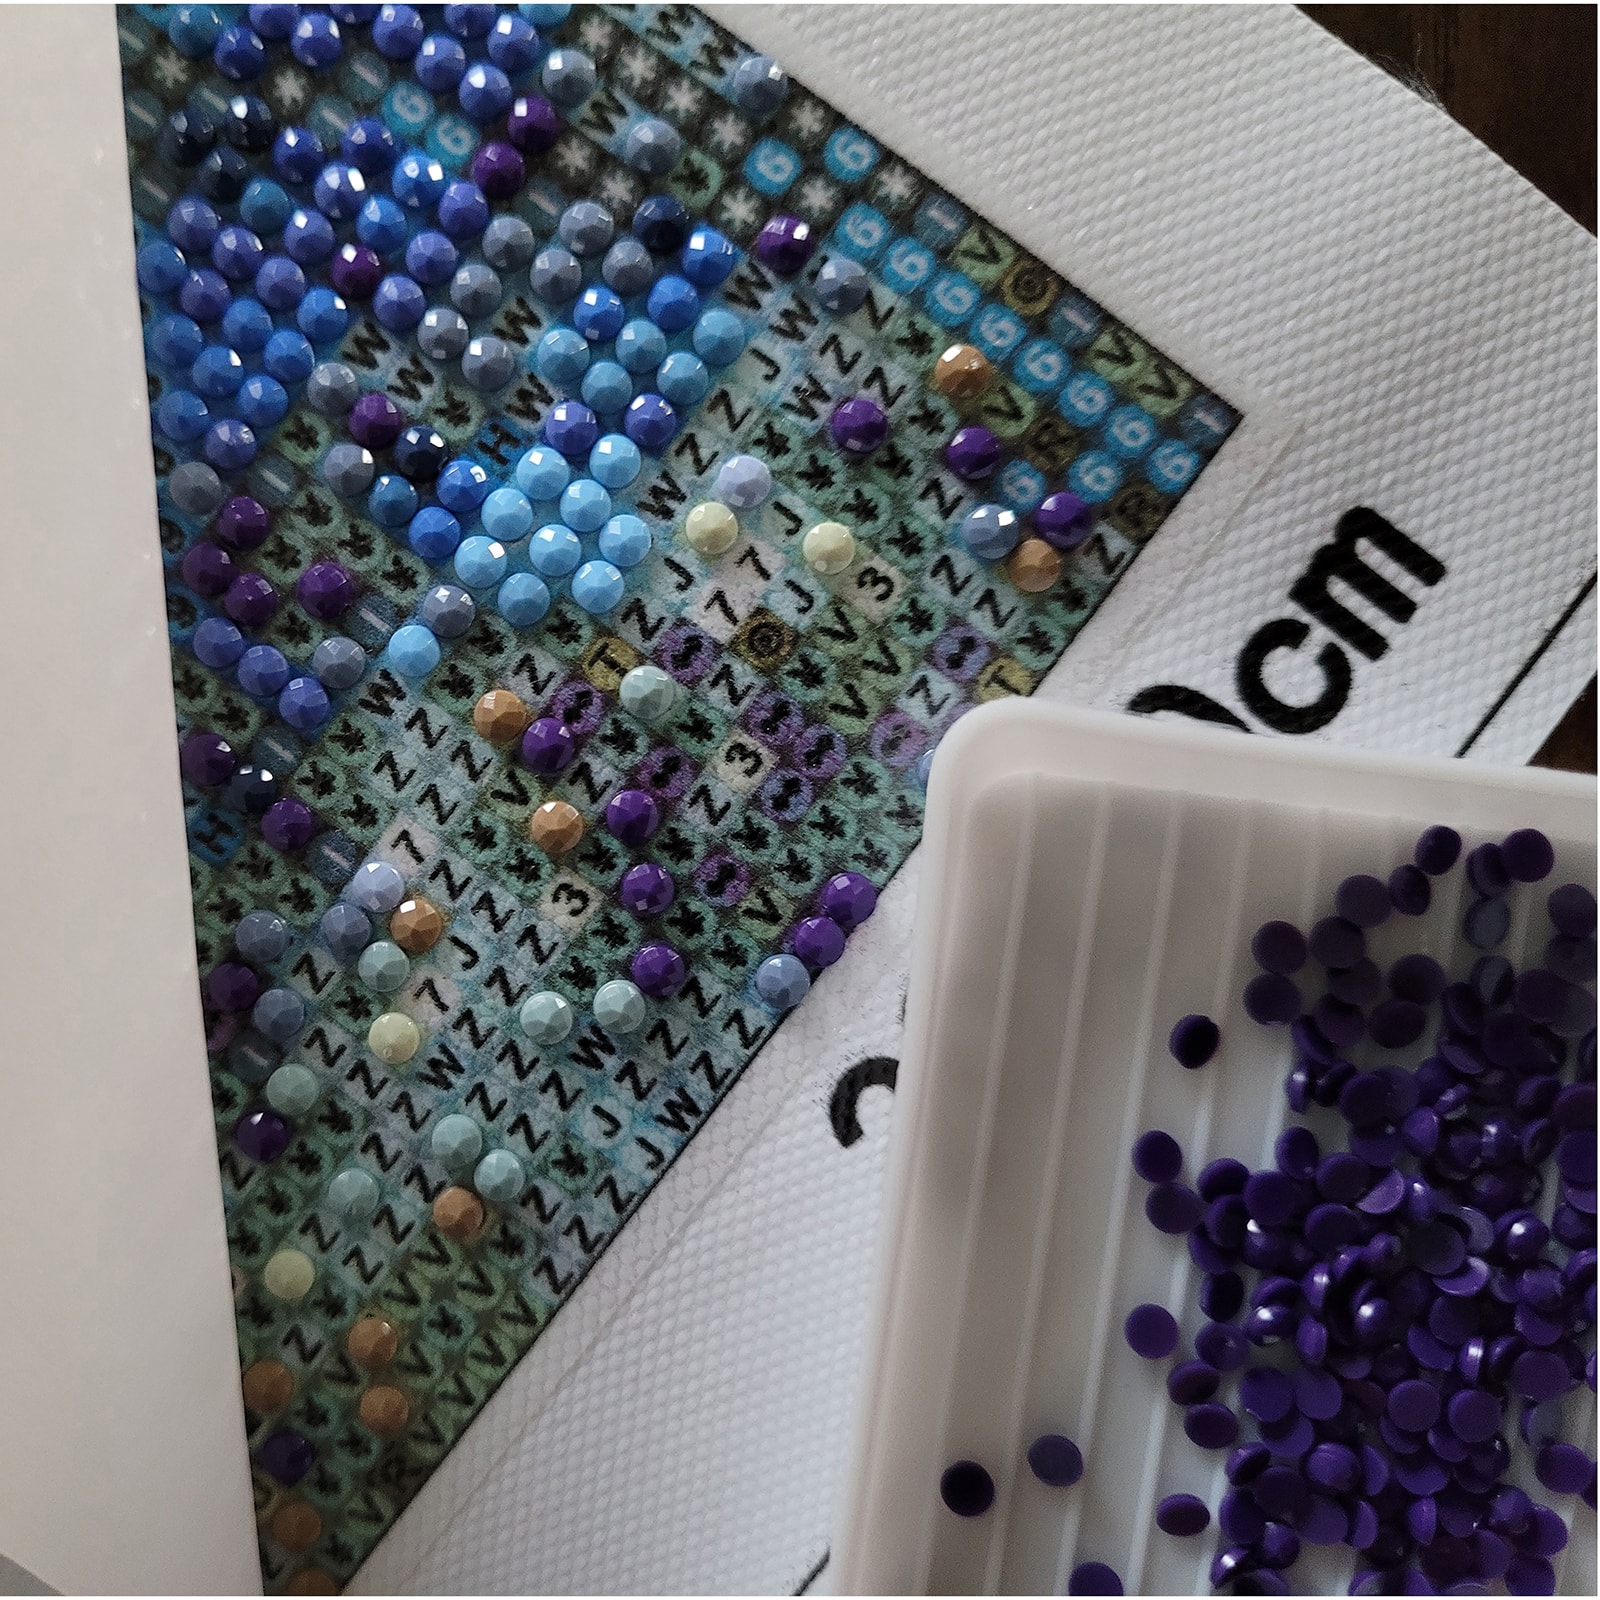 Sparkly Selections Piglet Fairy Diamond Art Kit, Round Diamonds